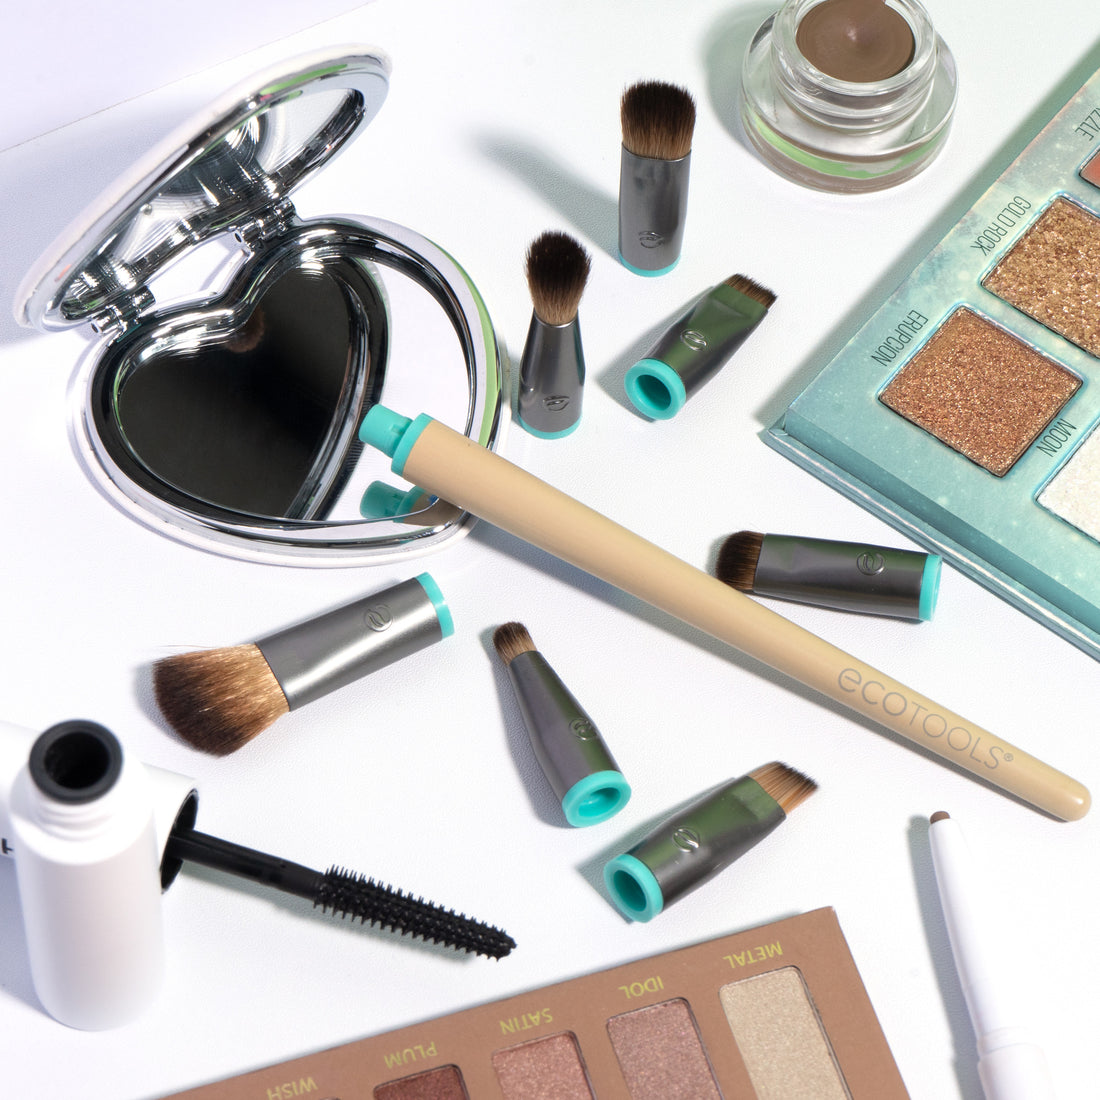 Plum Beauty Makeup Brush Cleaner : Target